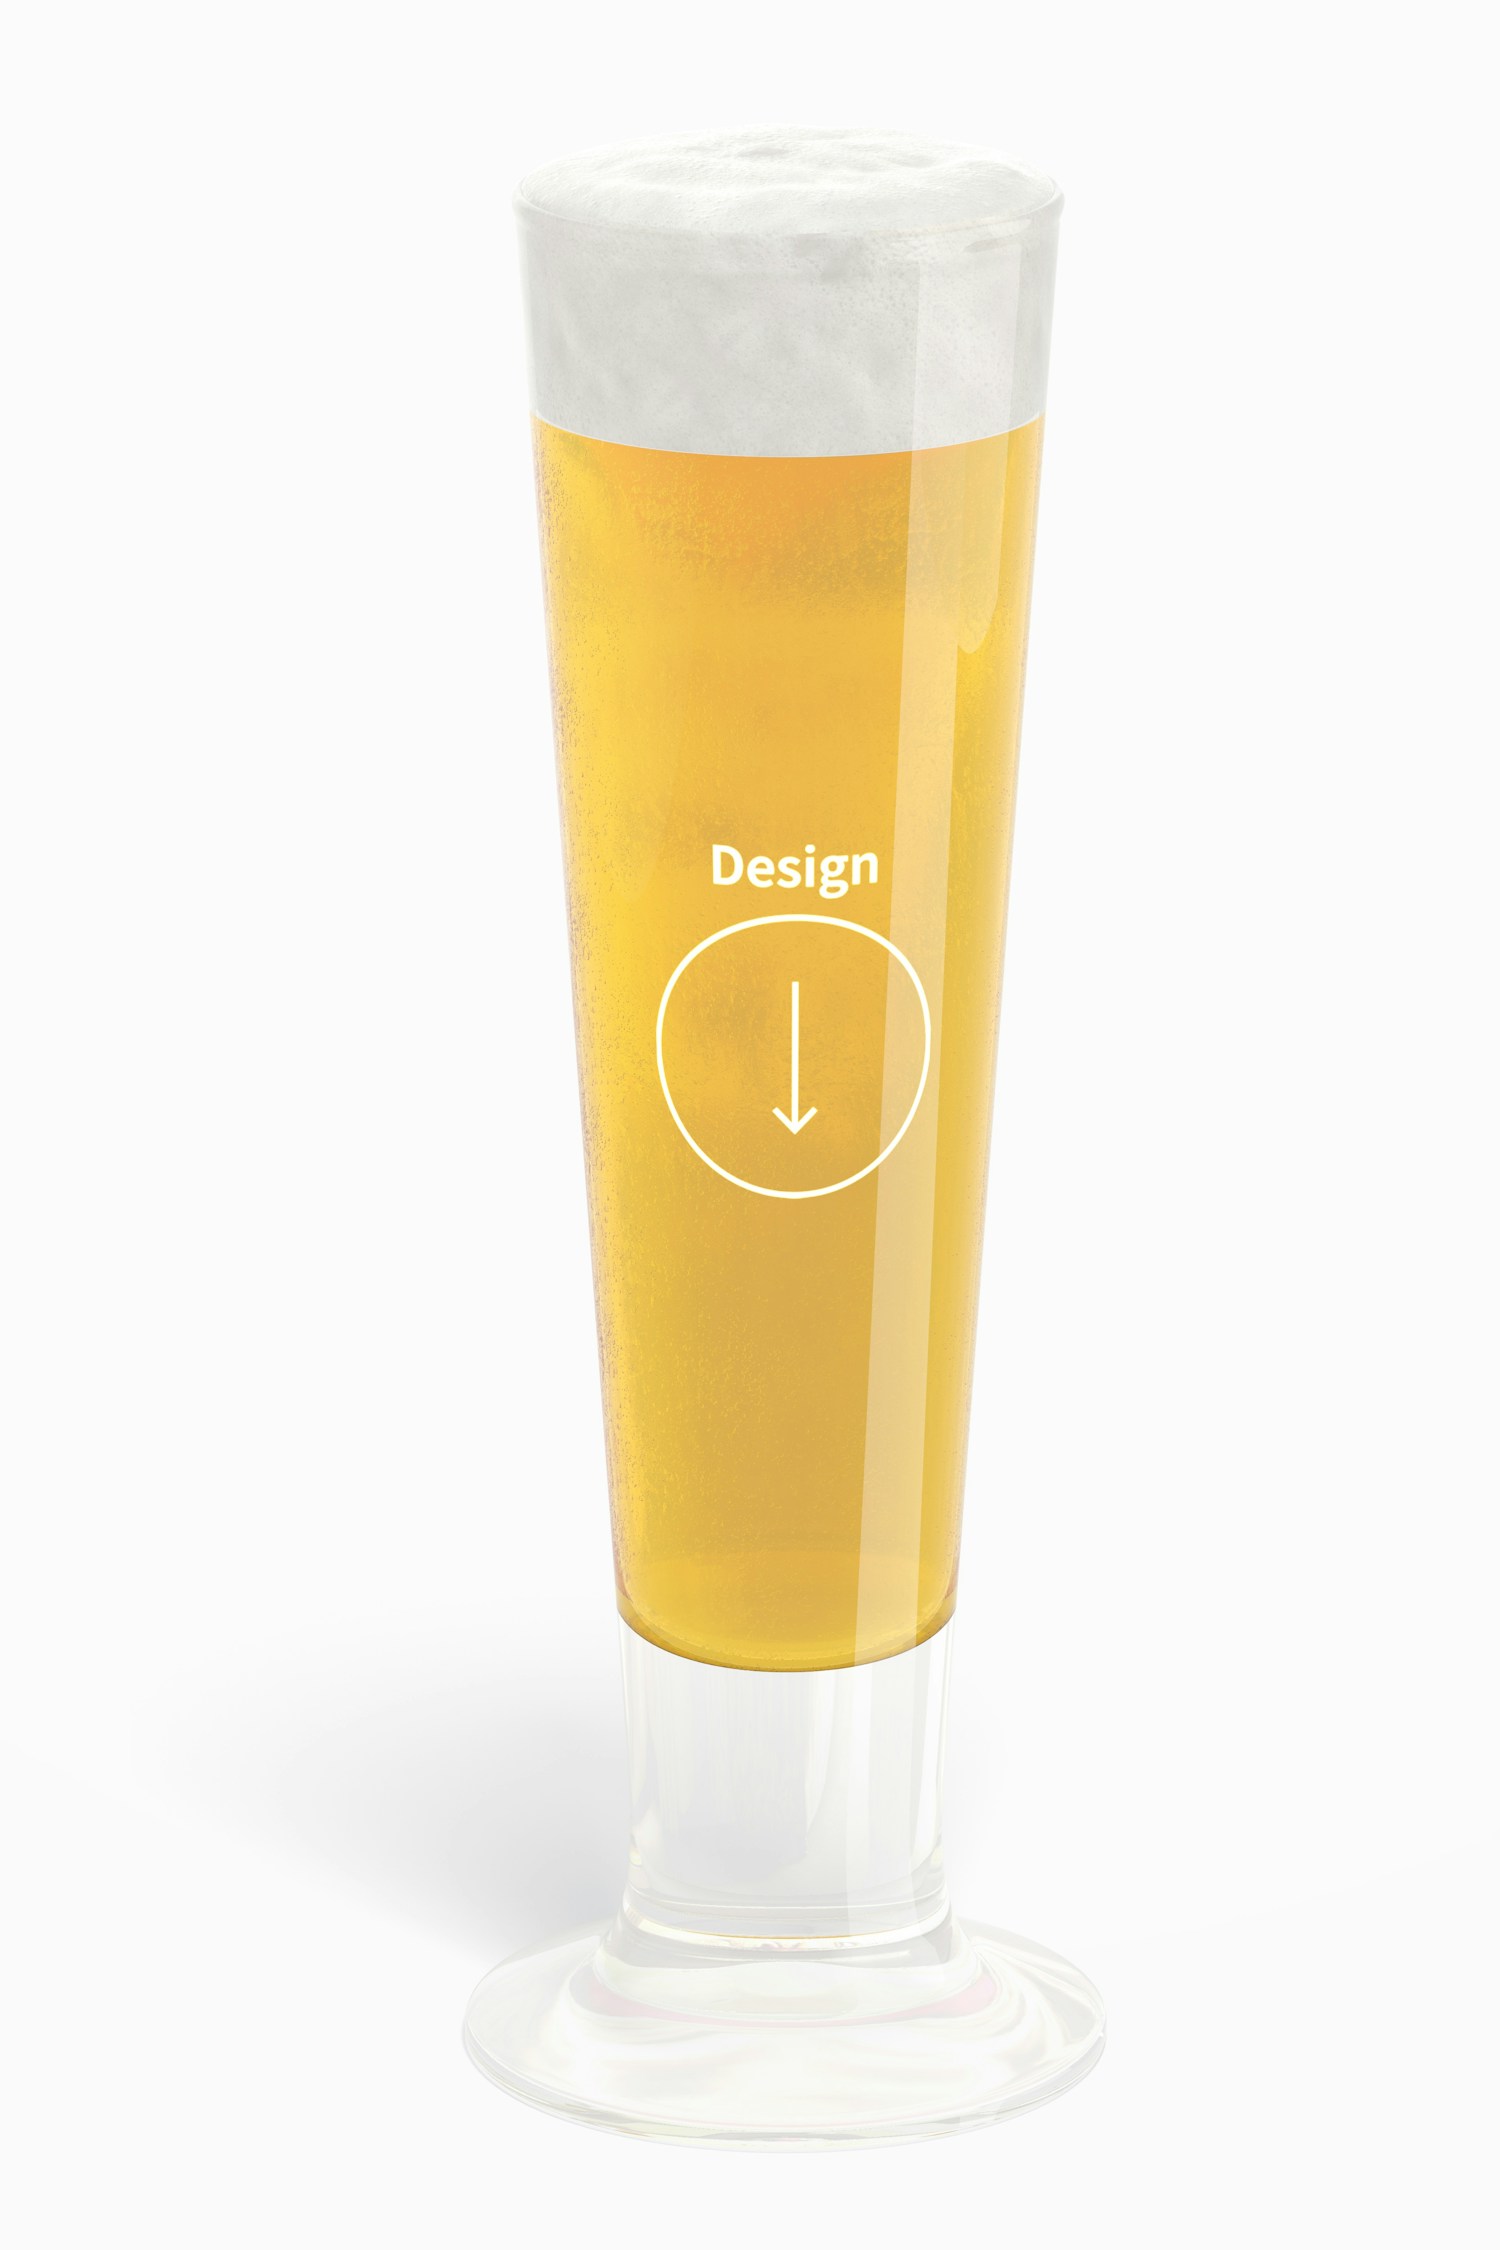 14 oz Glass Beer Cup Mockup